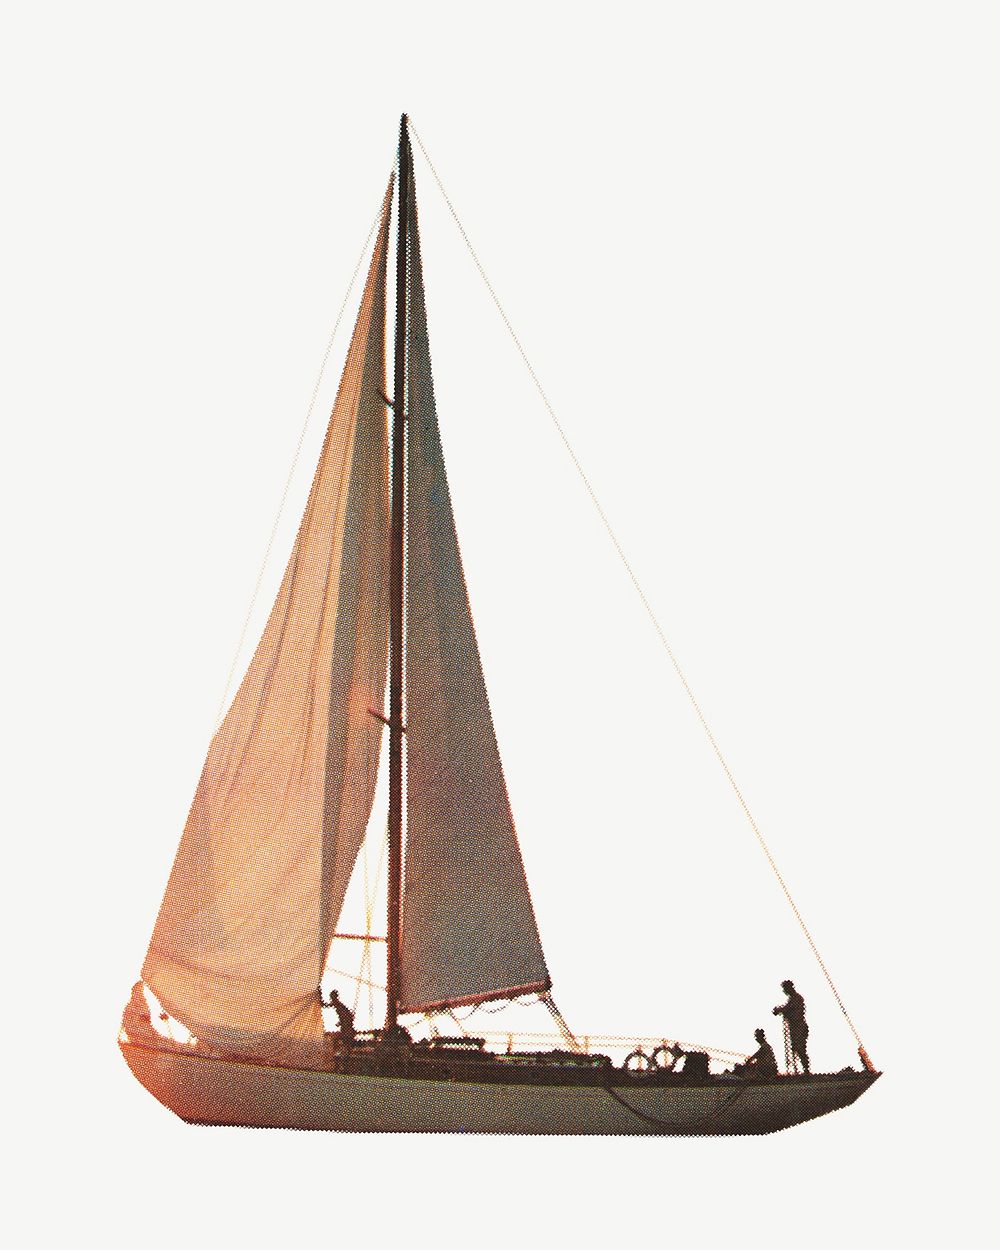 Sailboat, vehicle image psd. Remixed by rawpixel.